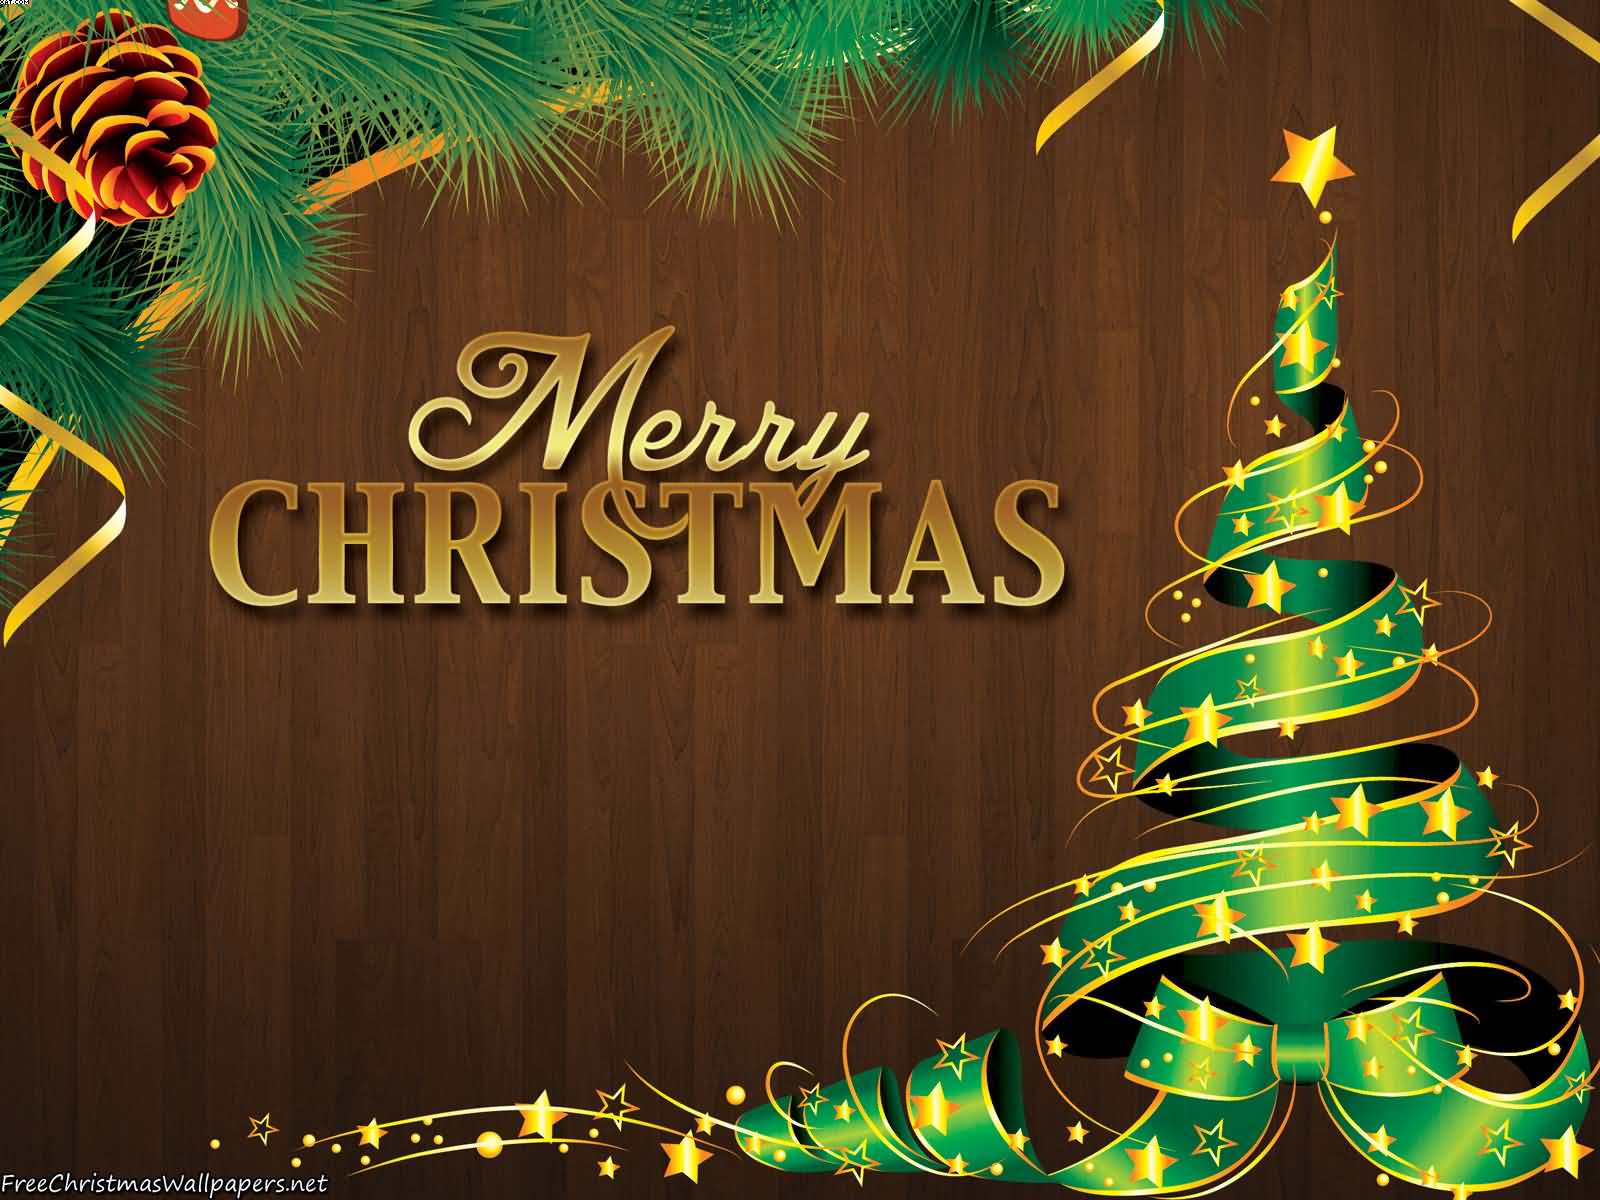 Wishing you Merry Christmas wallpaper